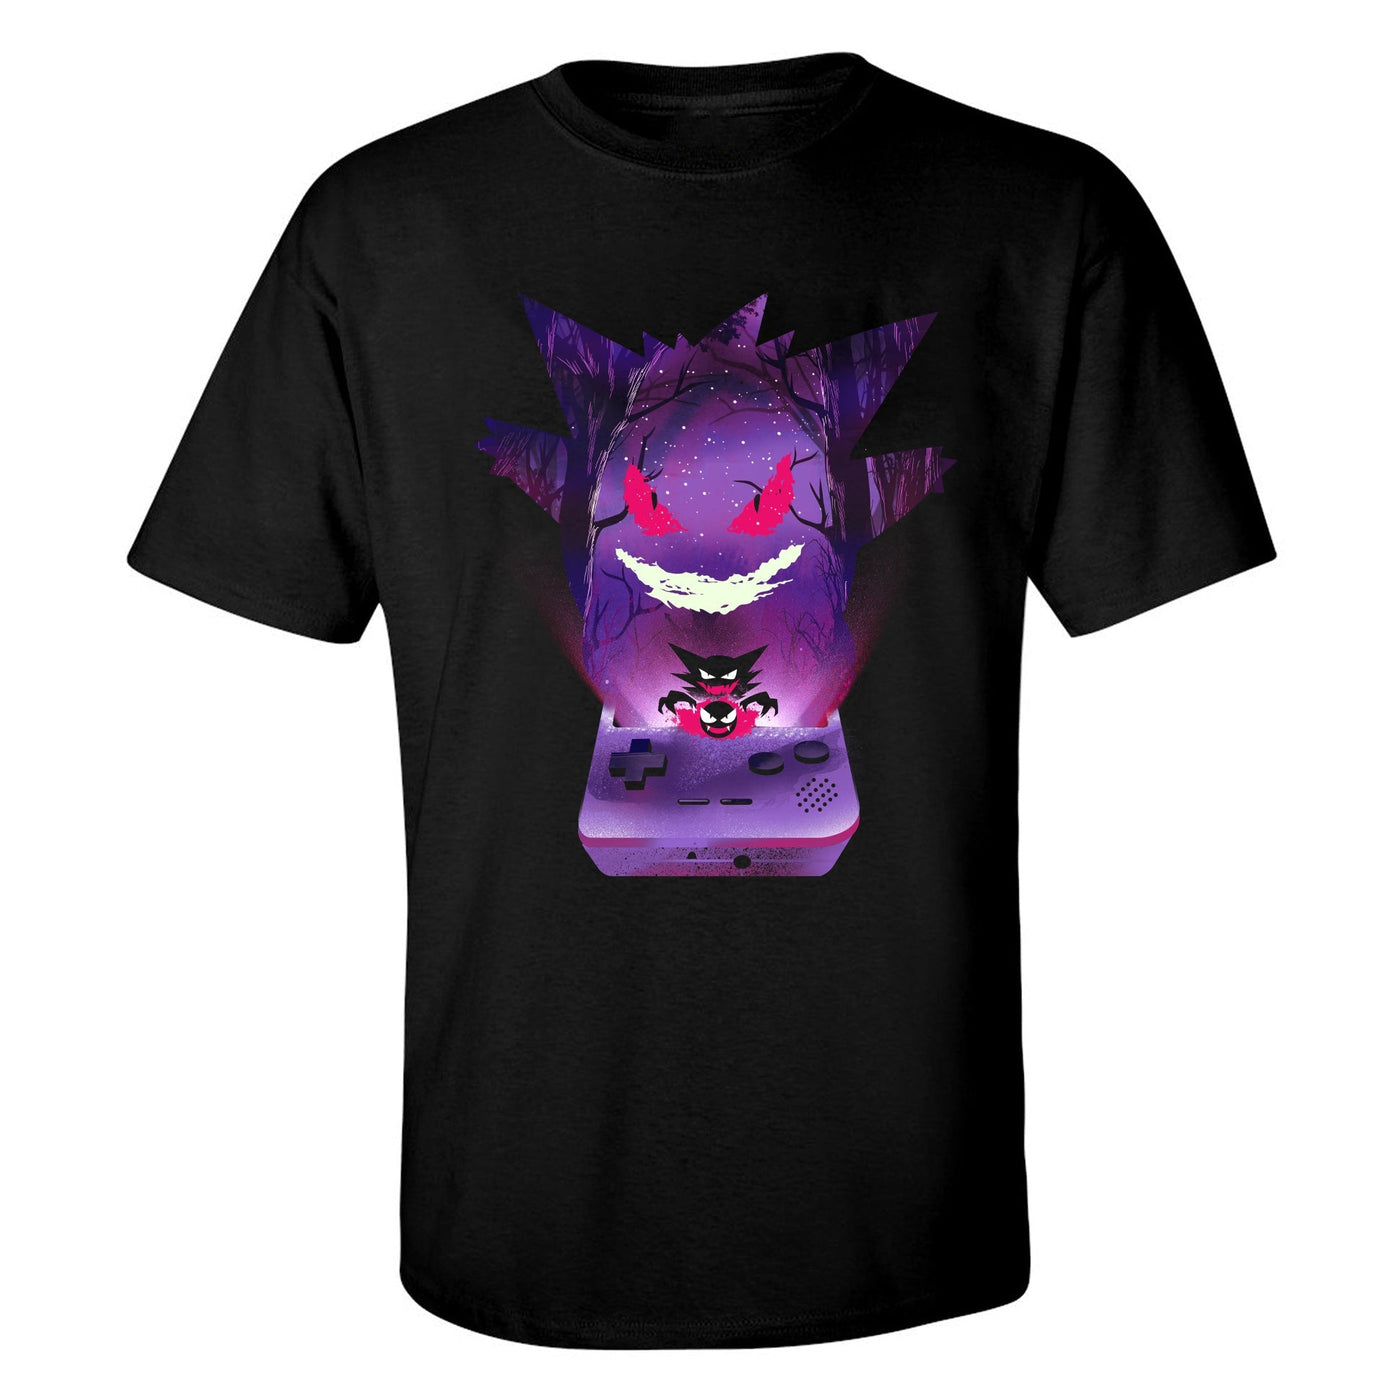 "Pokemon Gengar" T-Shirt by Dandingerozz